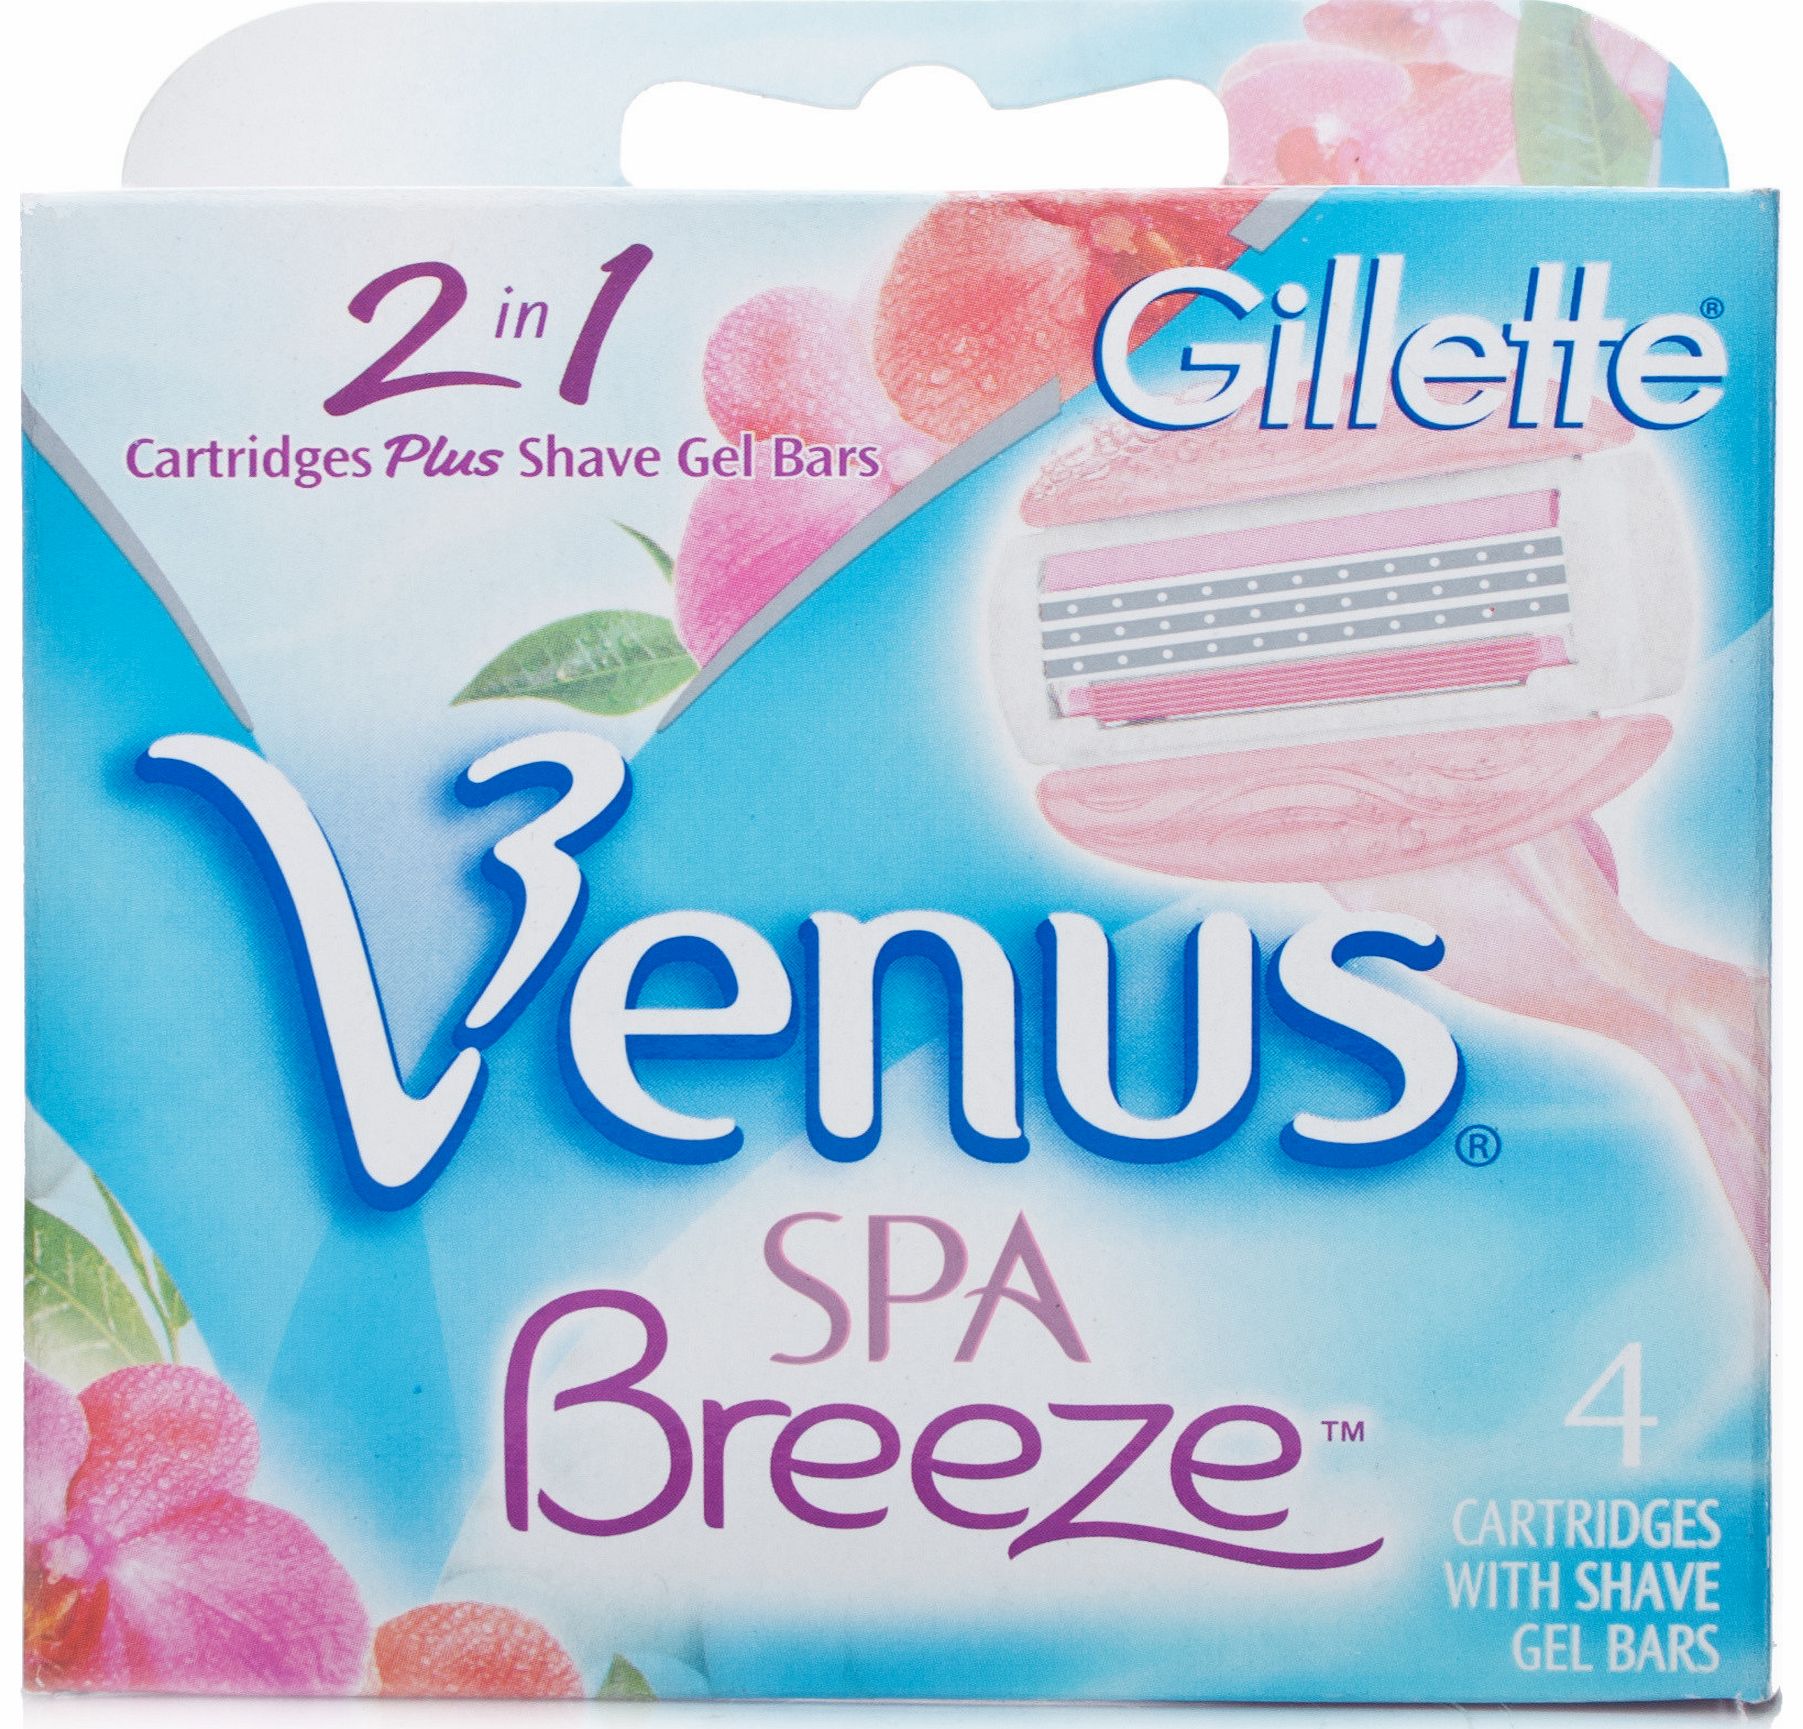 Gillette Venus Breeze Spa Blades